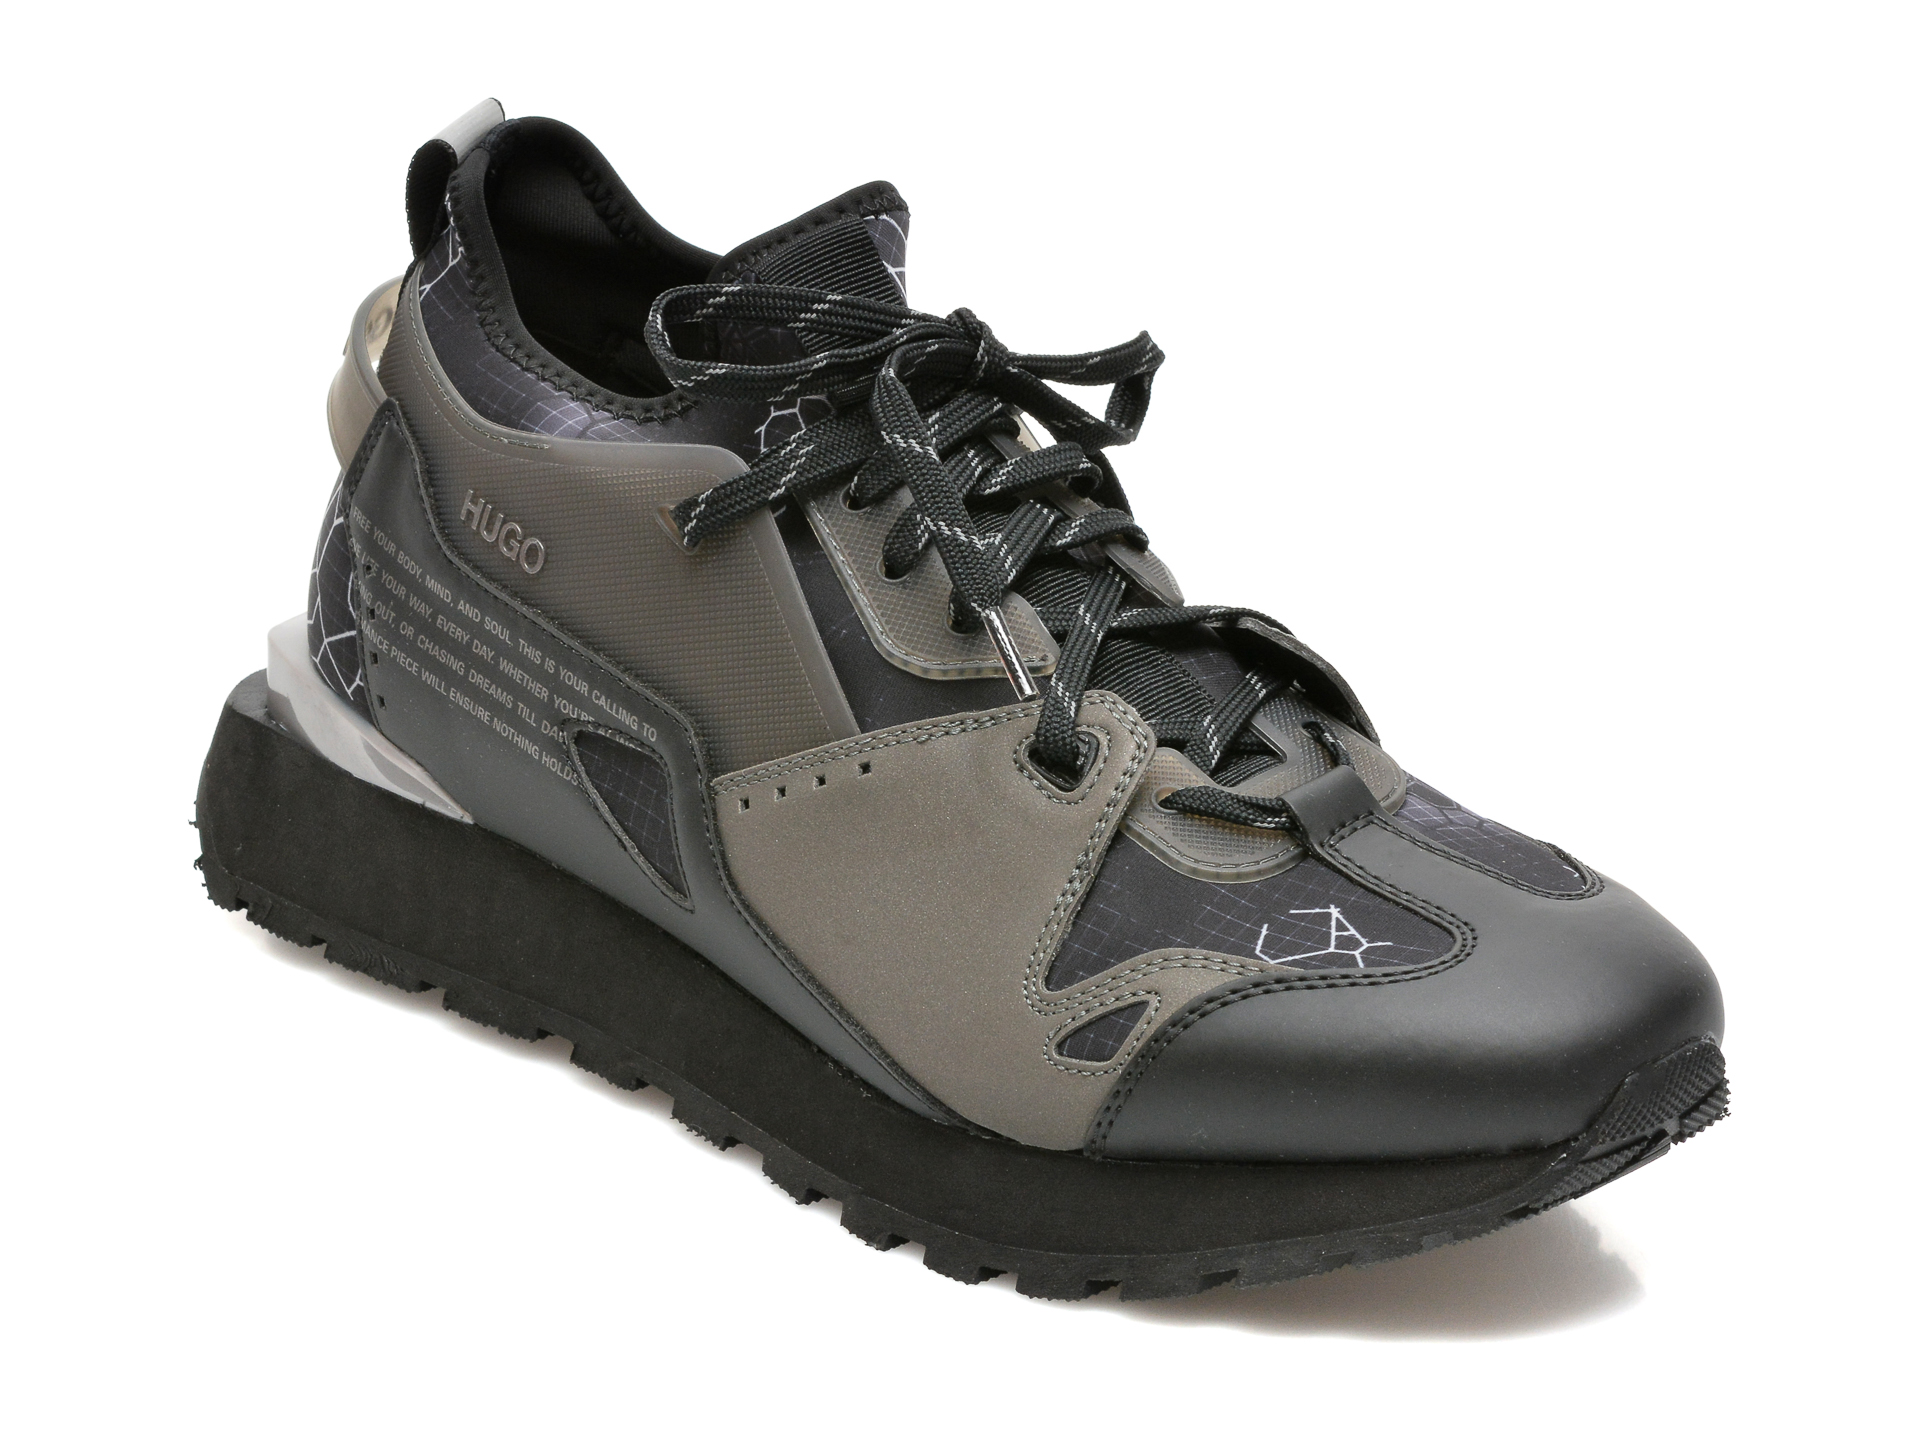 Pantofi sport HUGO BOSS negri, 9144, din material textil si piele ecologica Hugo Boss imagine 2022 13clothing.ro